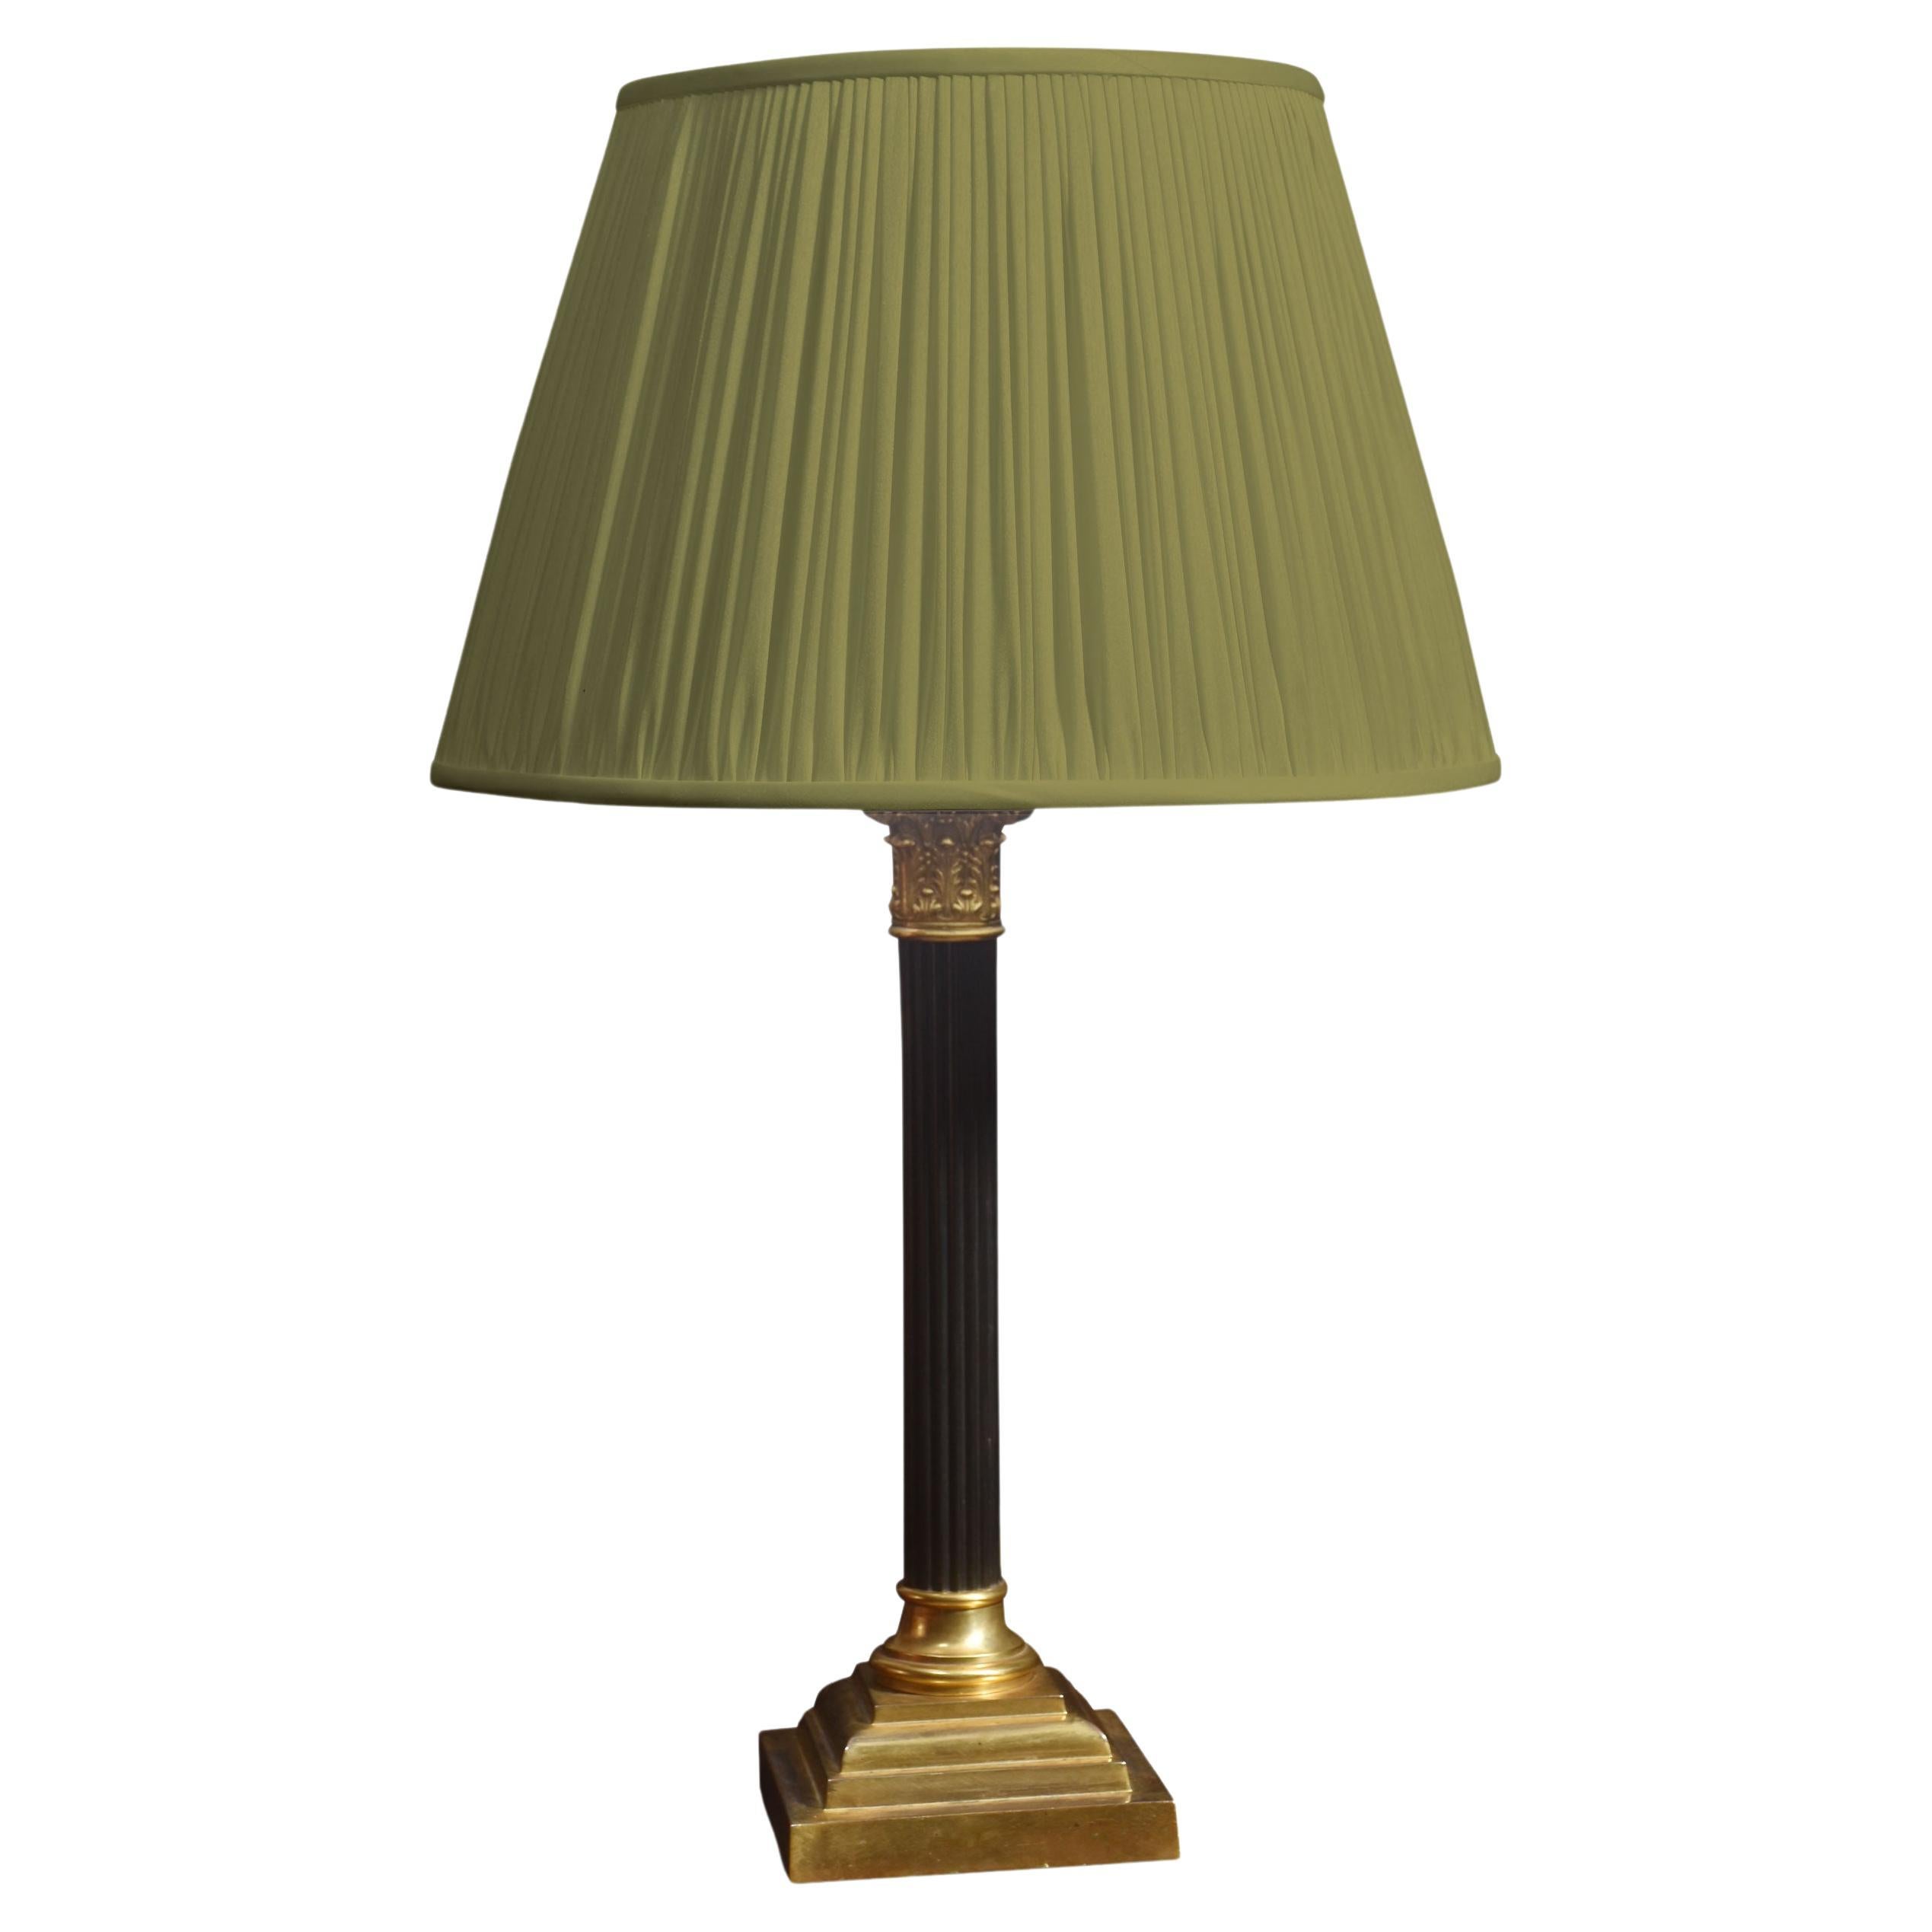 Brass corinthian column table lamp